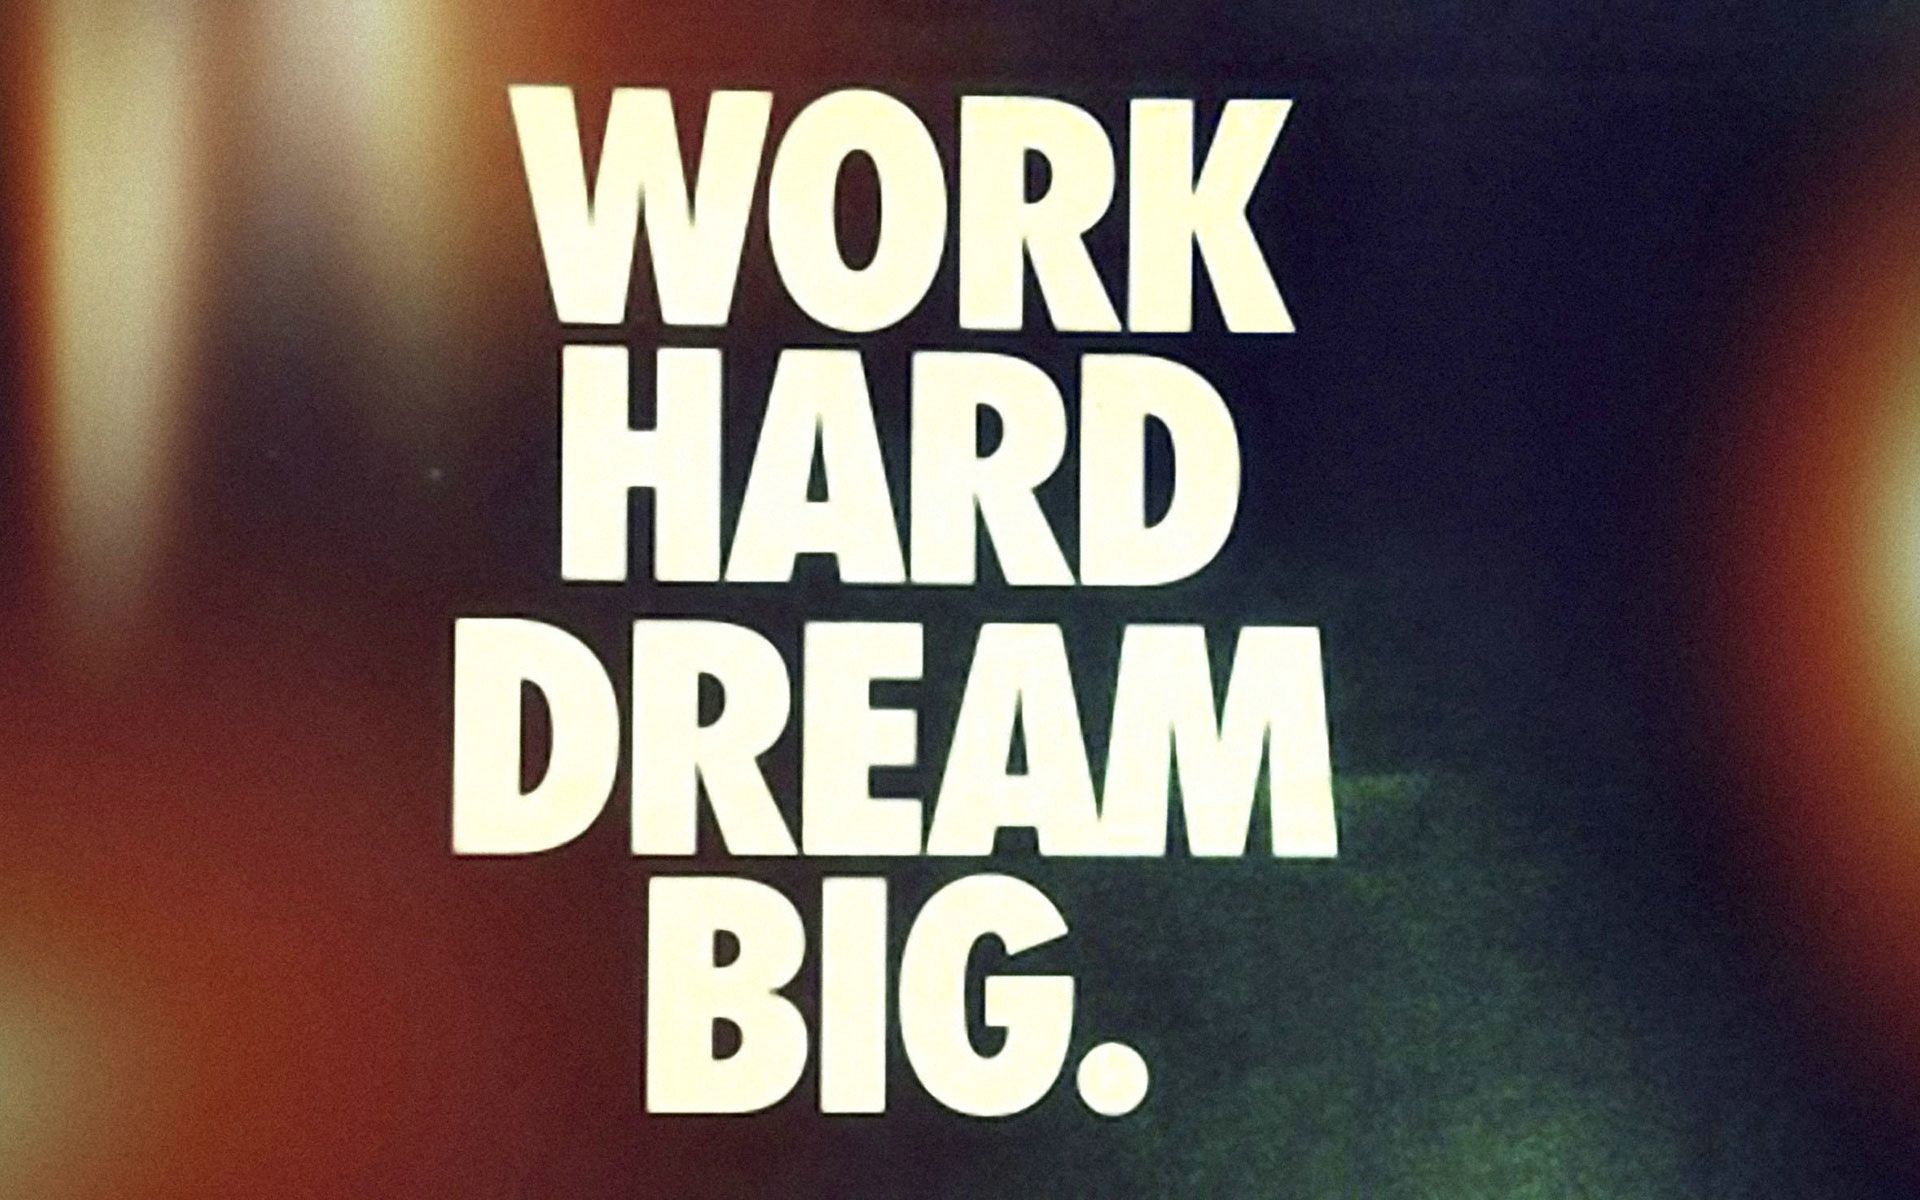 Work hard dream big.